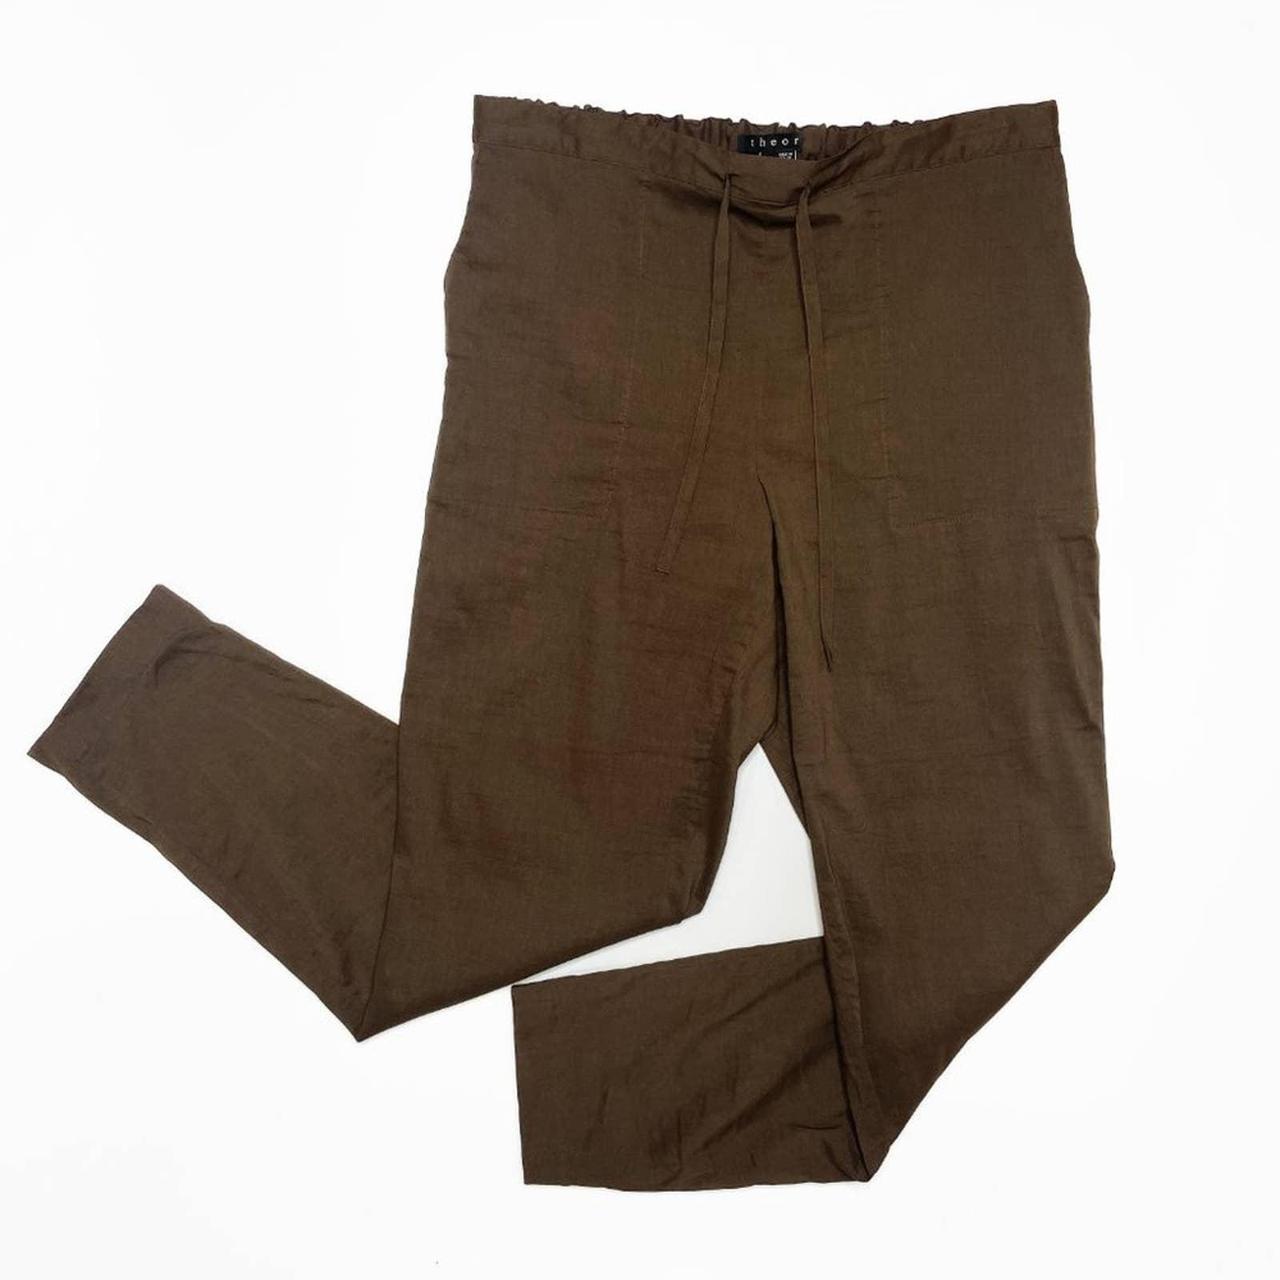 Chocolate Brown Linen Pants